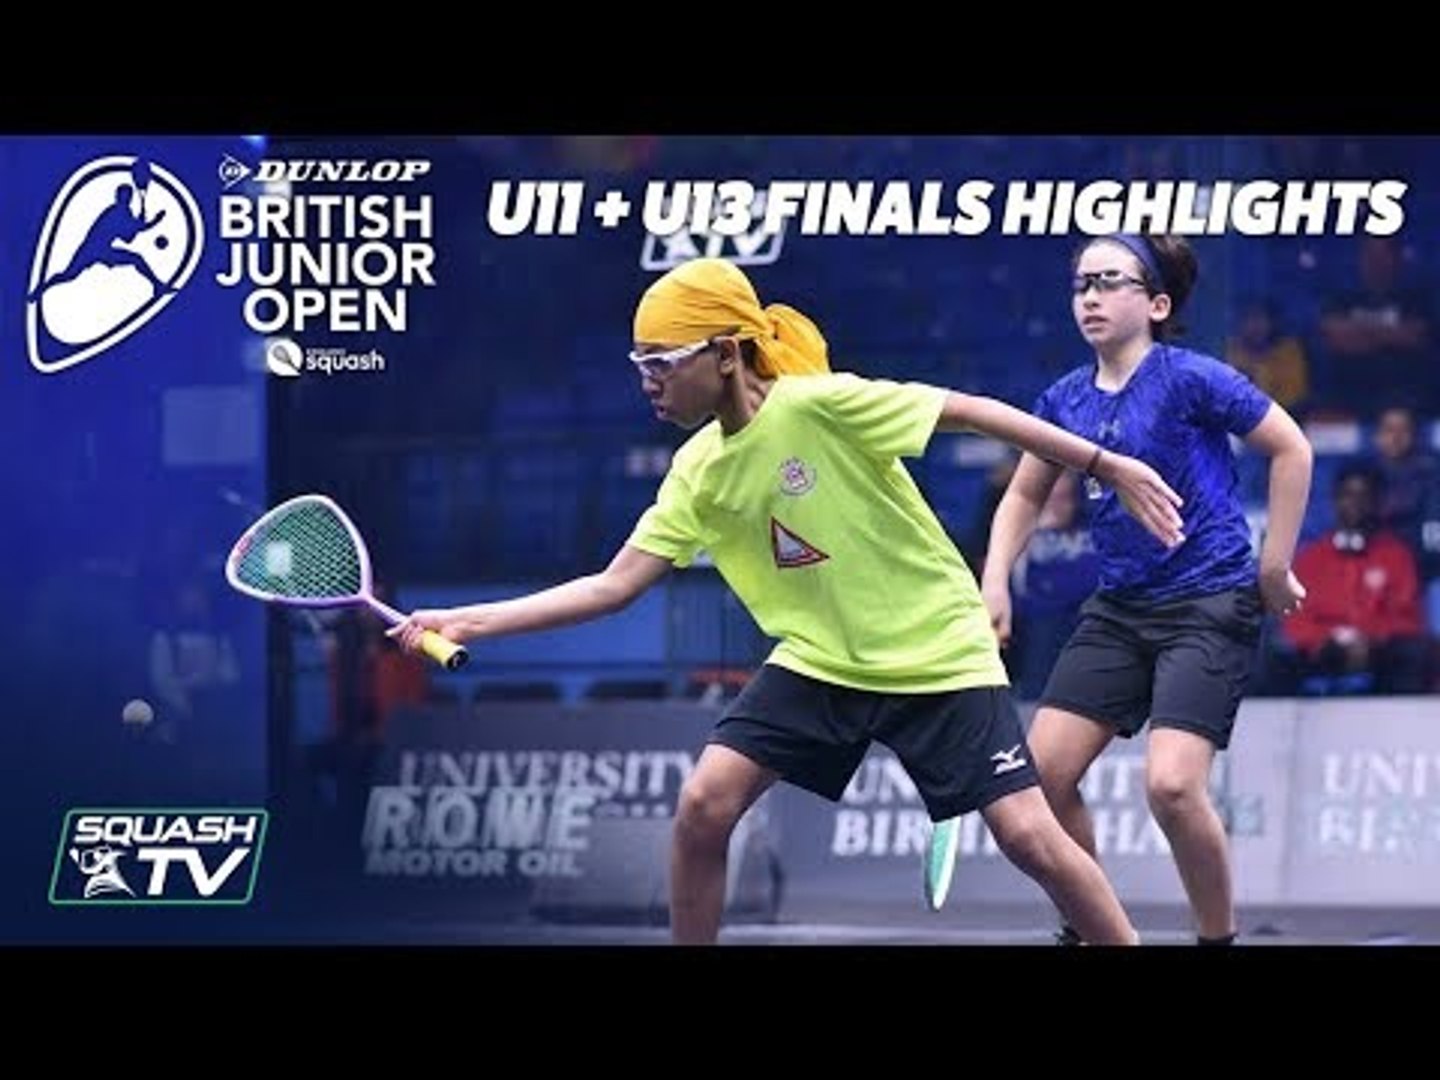 Squash: Dunlop British Junior Open 2019 - U11 + U13 Final Highlights -  video Dailymotion